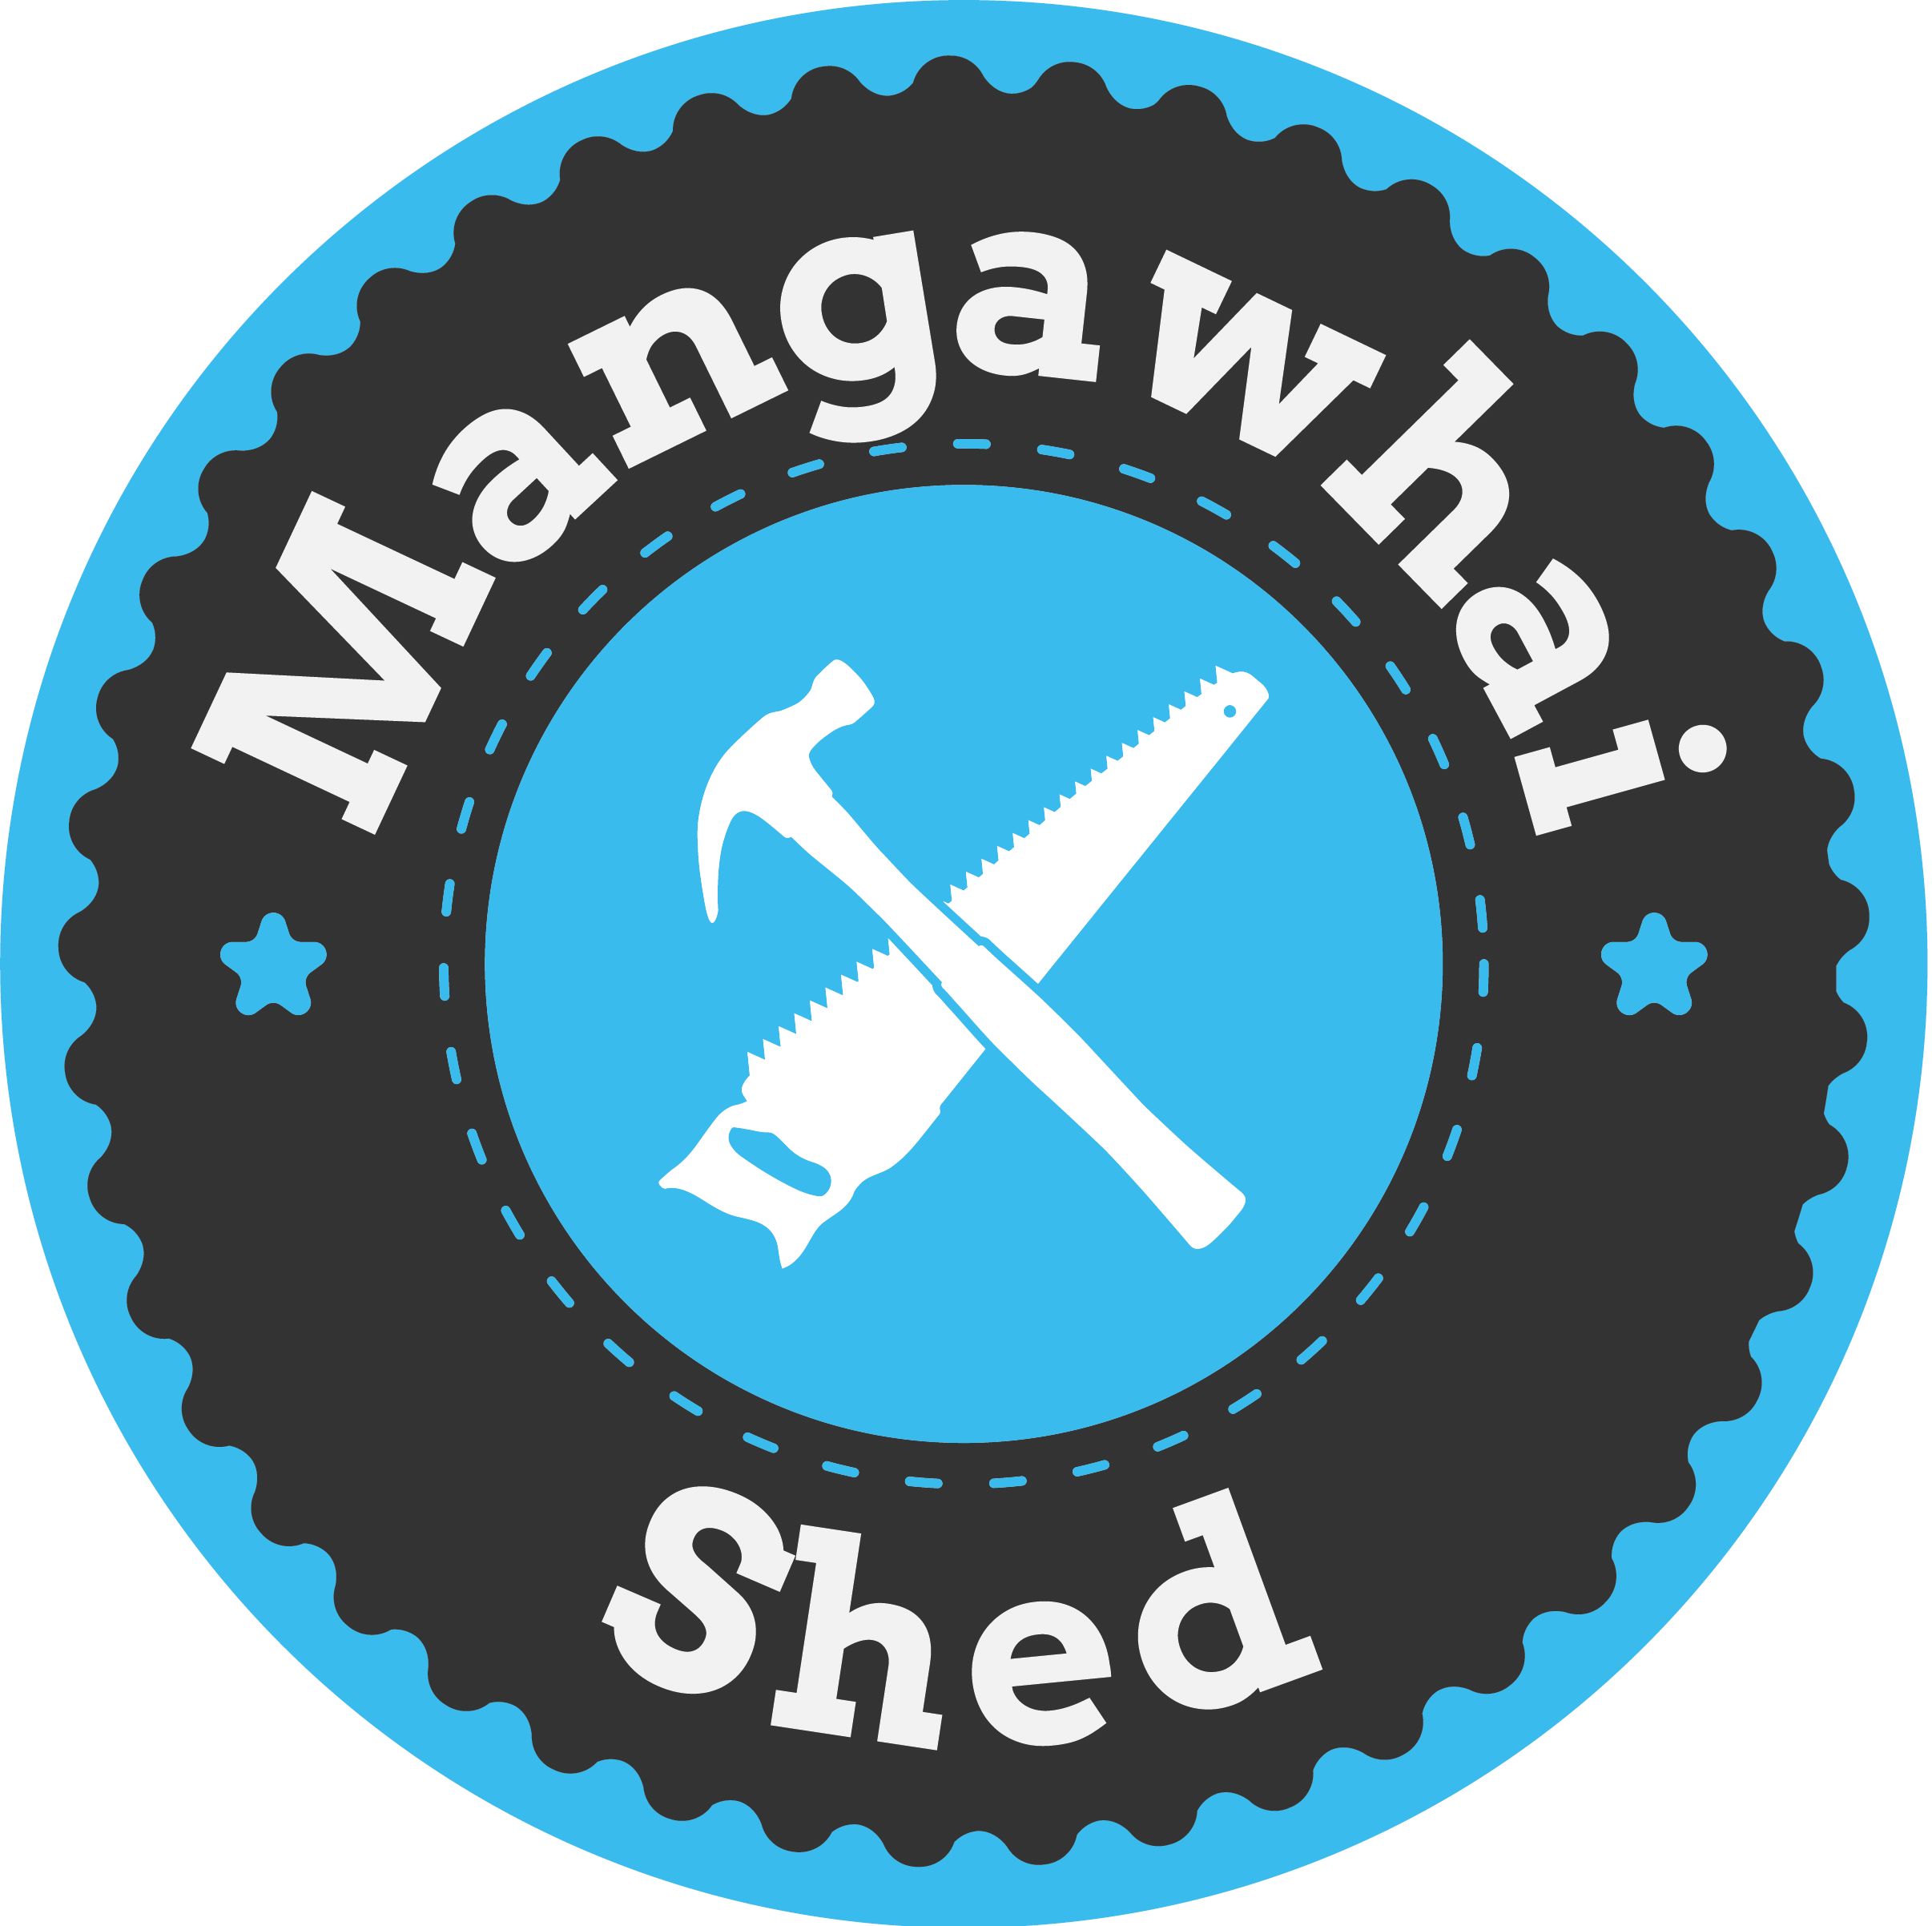 Mangawhai Shed logo .png